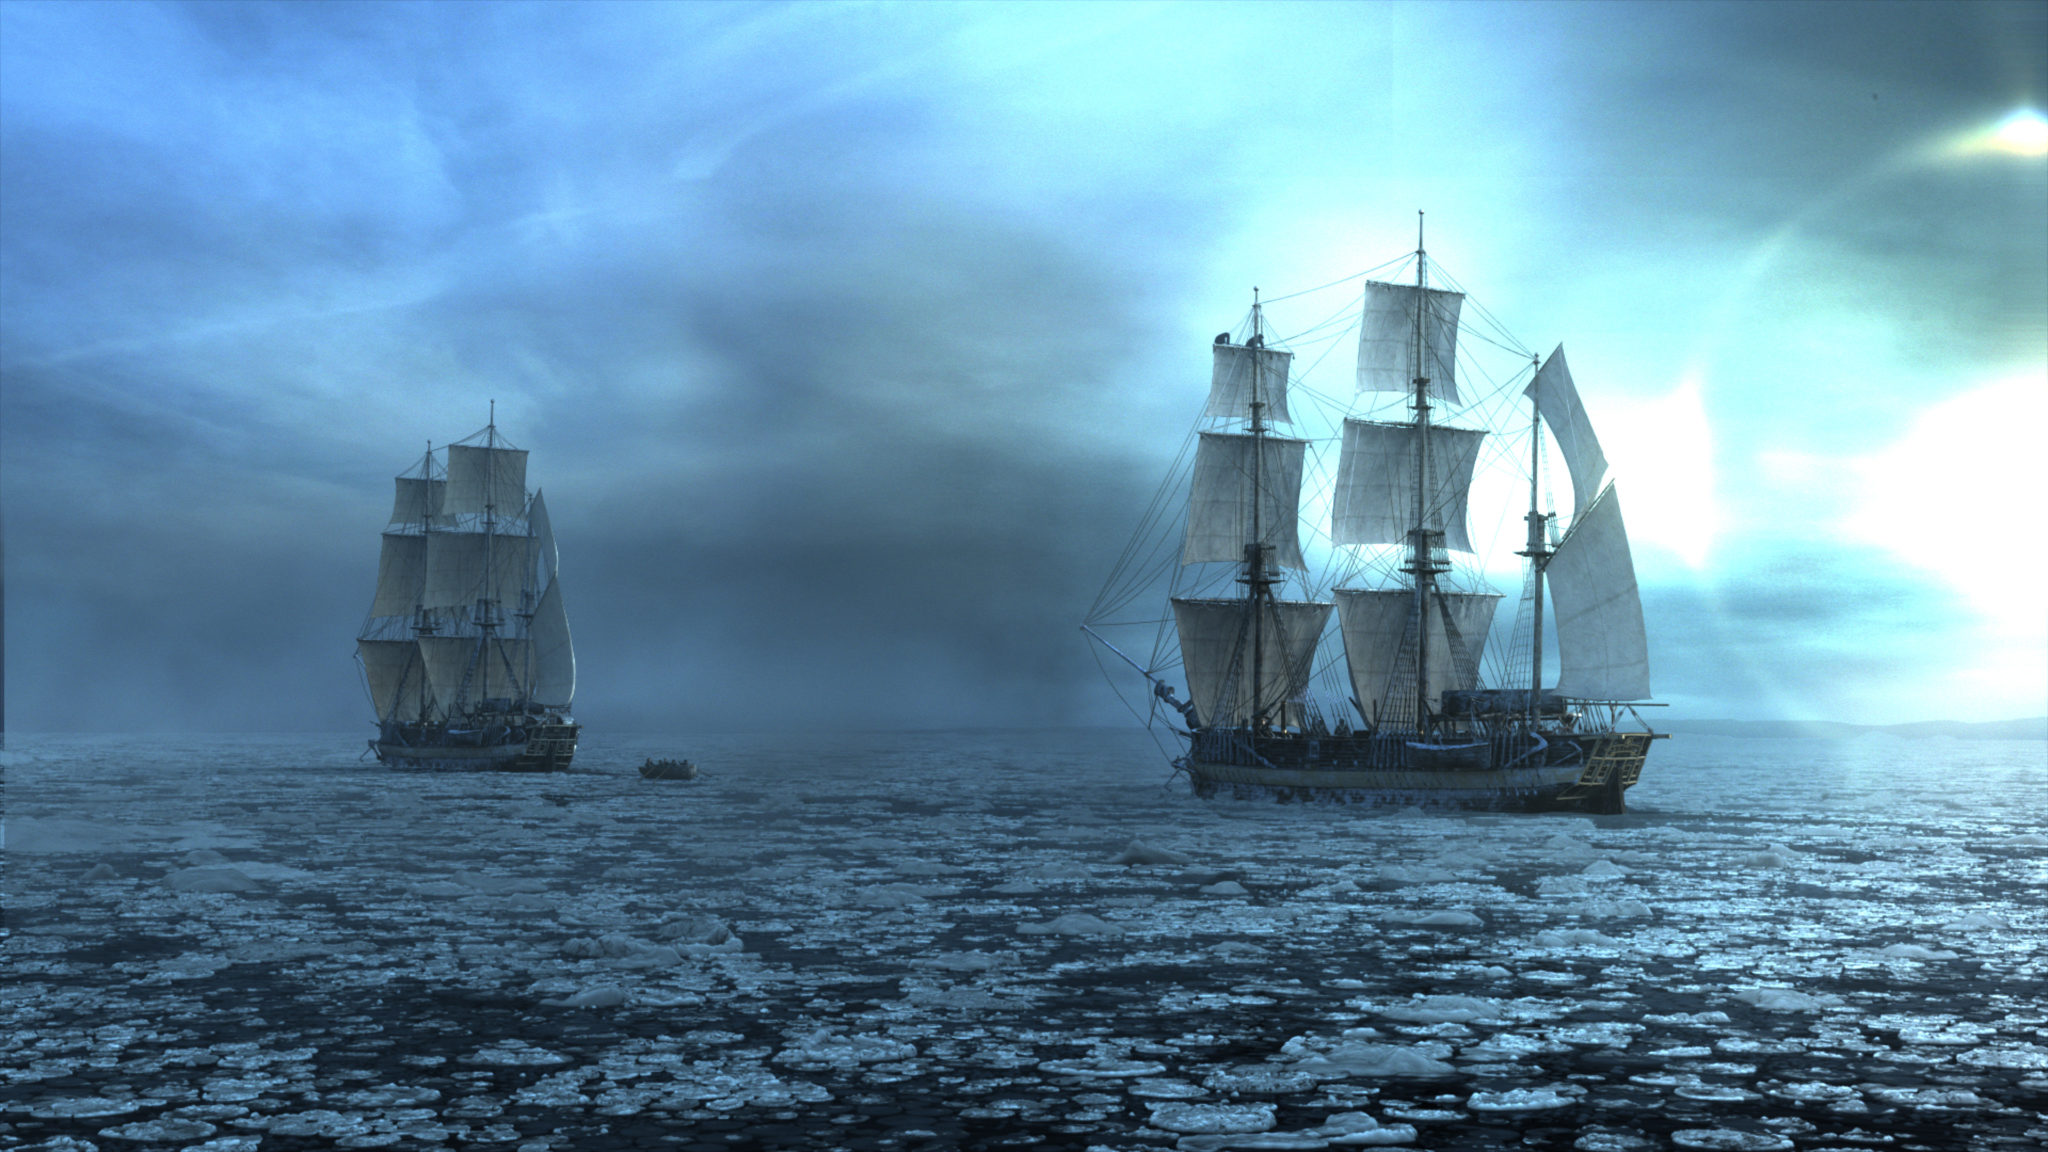 VFX shot of two ships